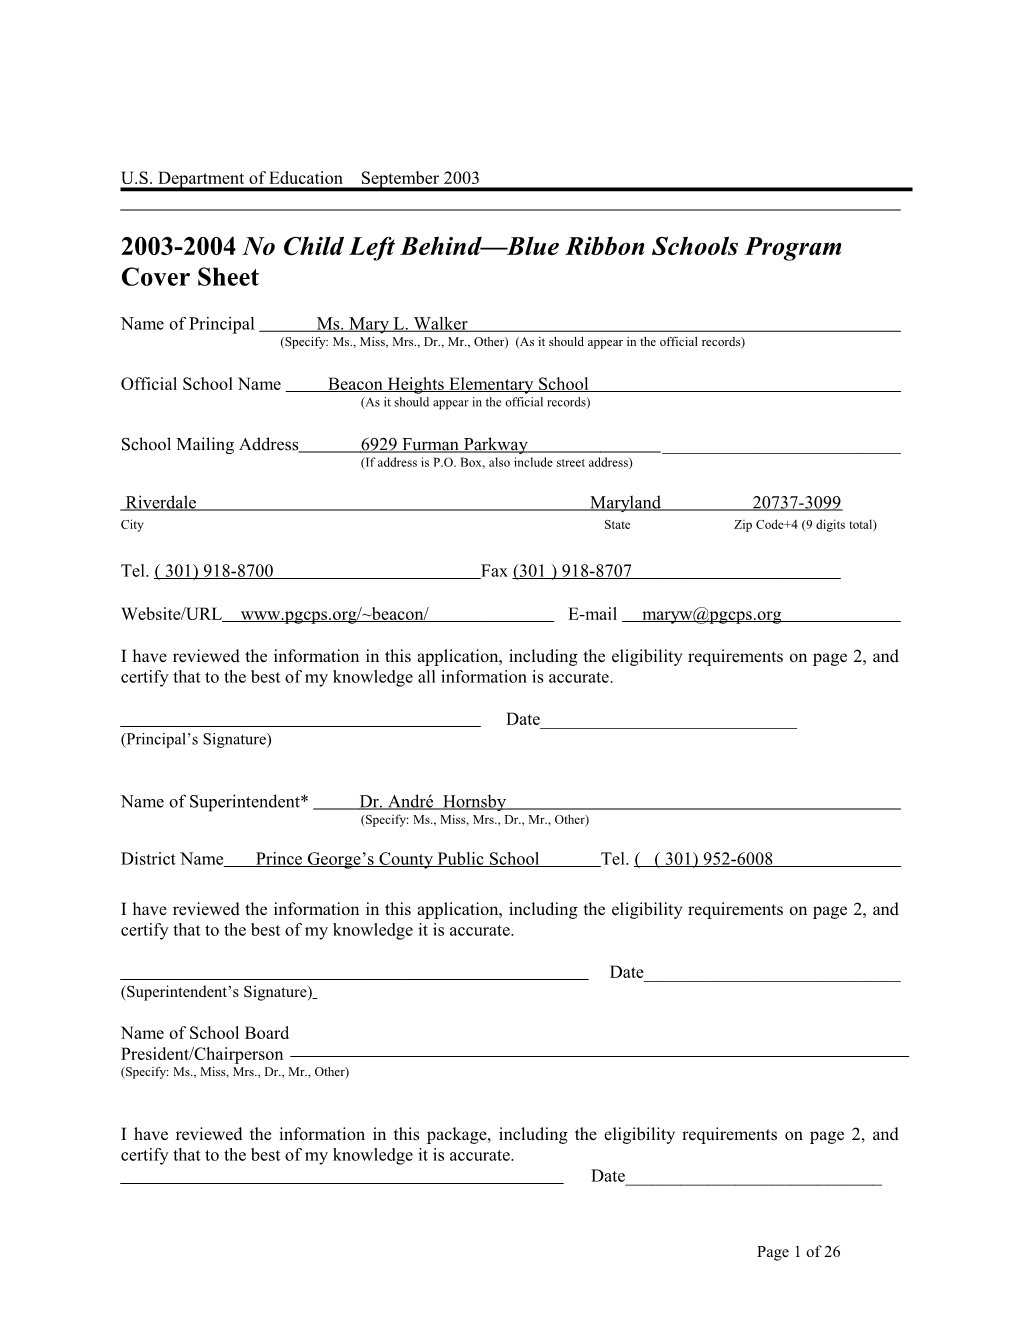 Beacon Heights Elementary School 2004 No Child Left Behind-Blue Ribbon School Application